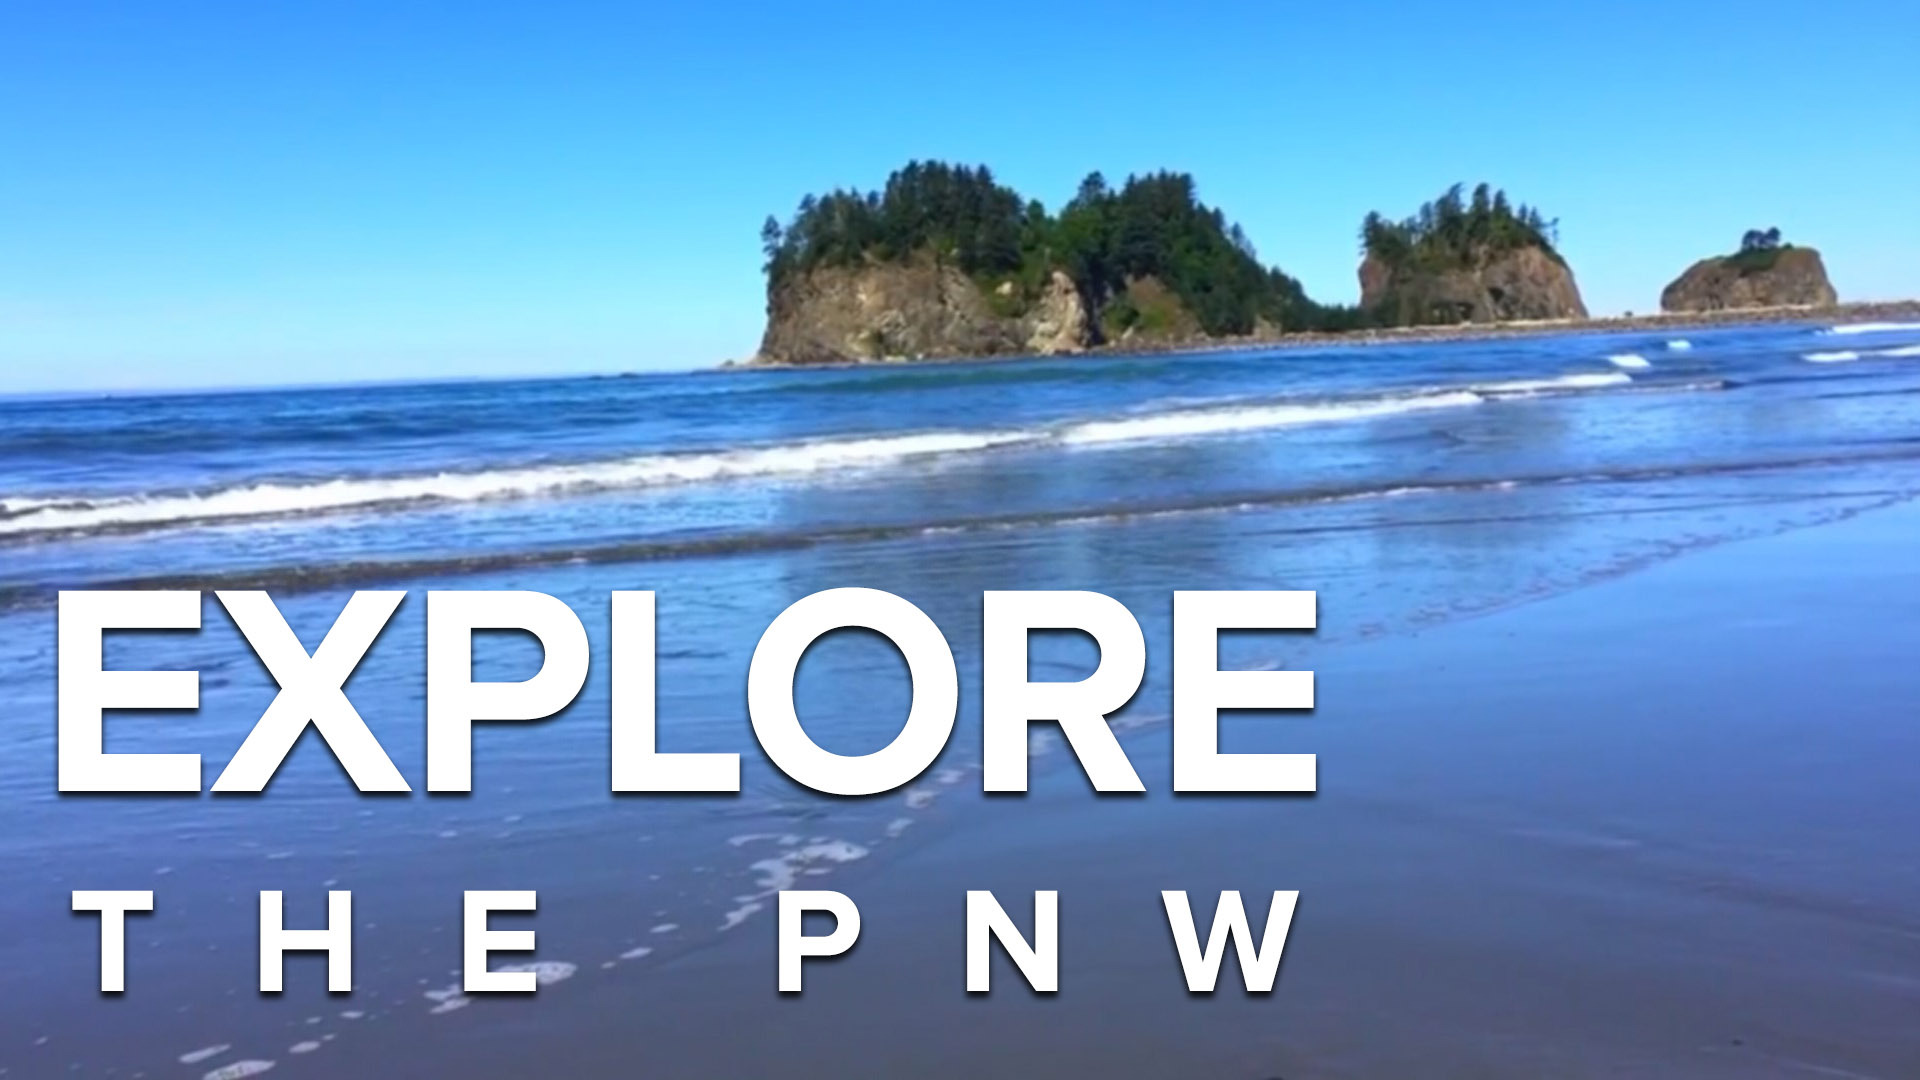 Explore the PNW